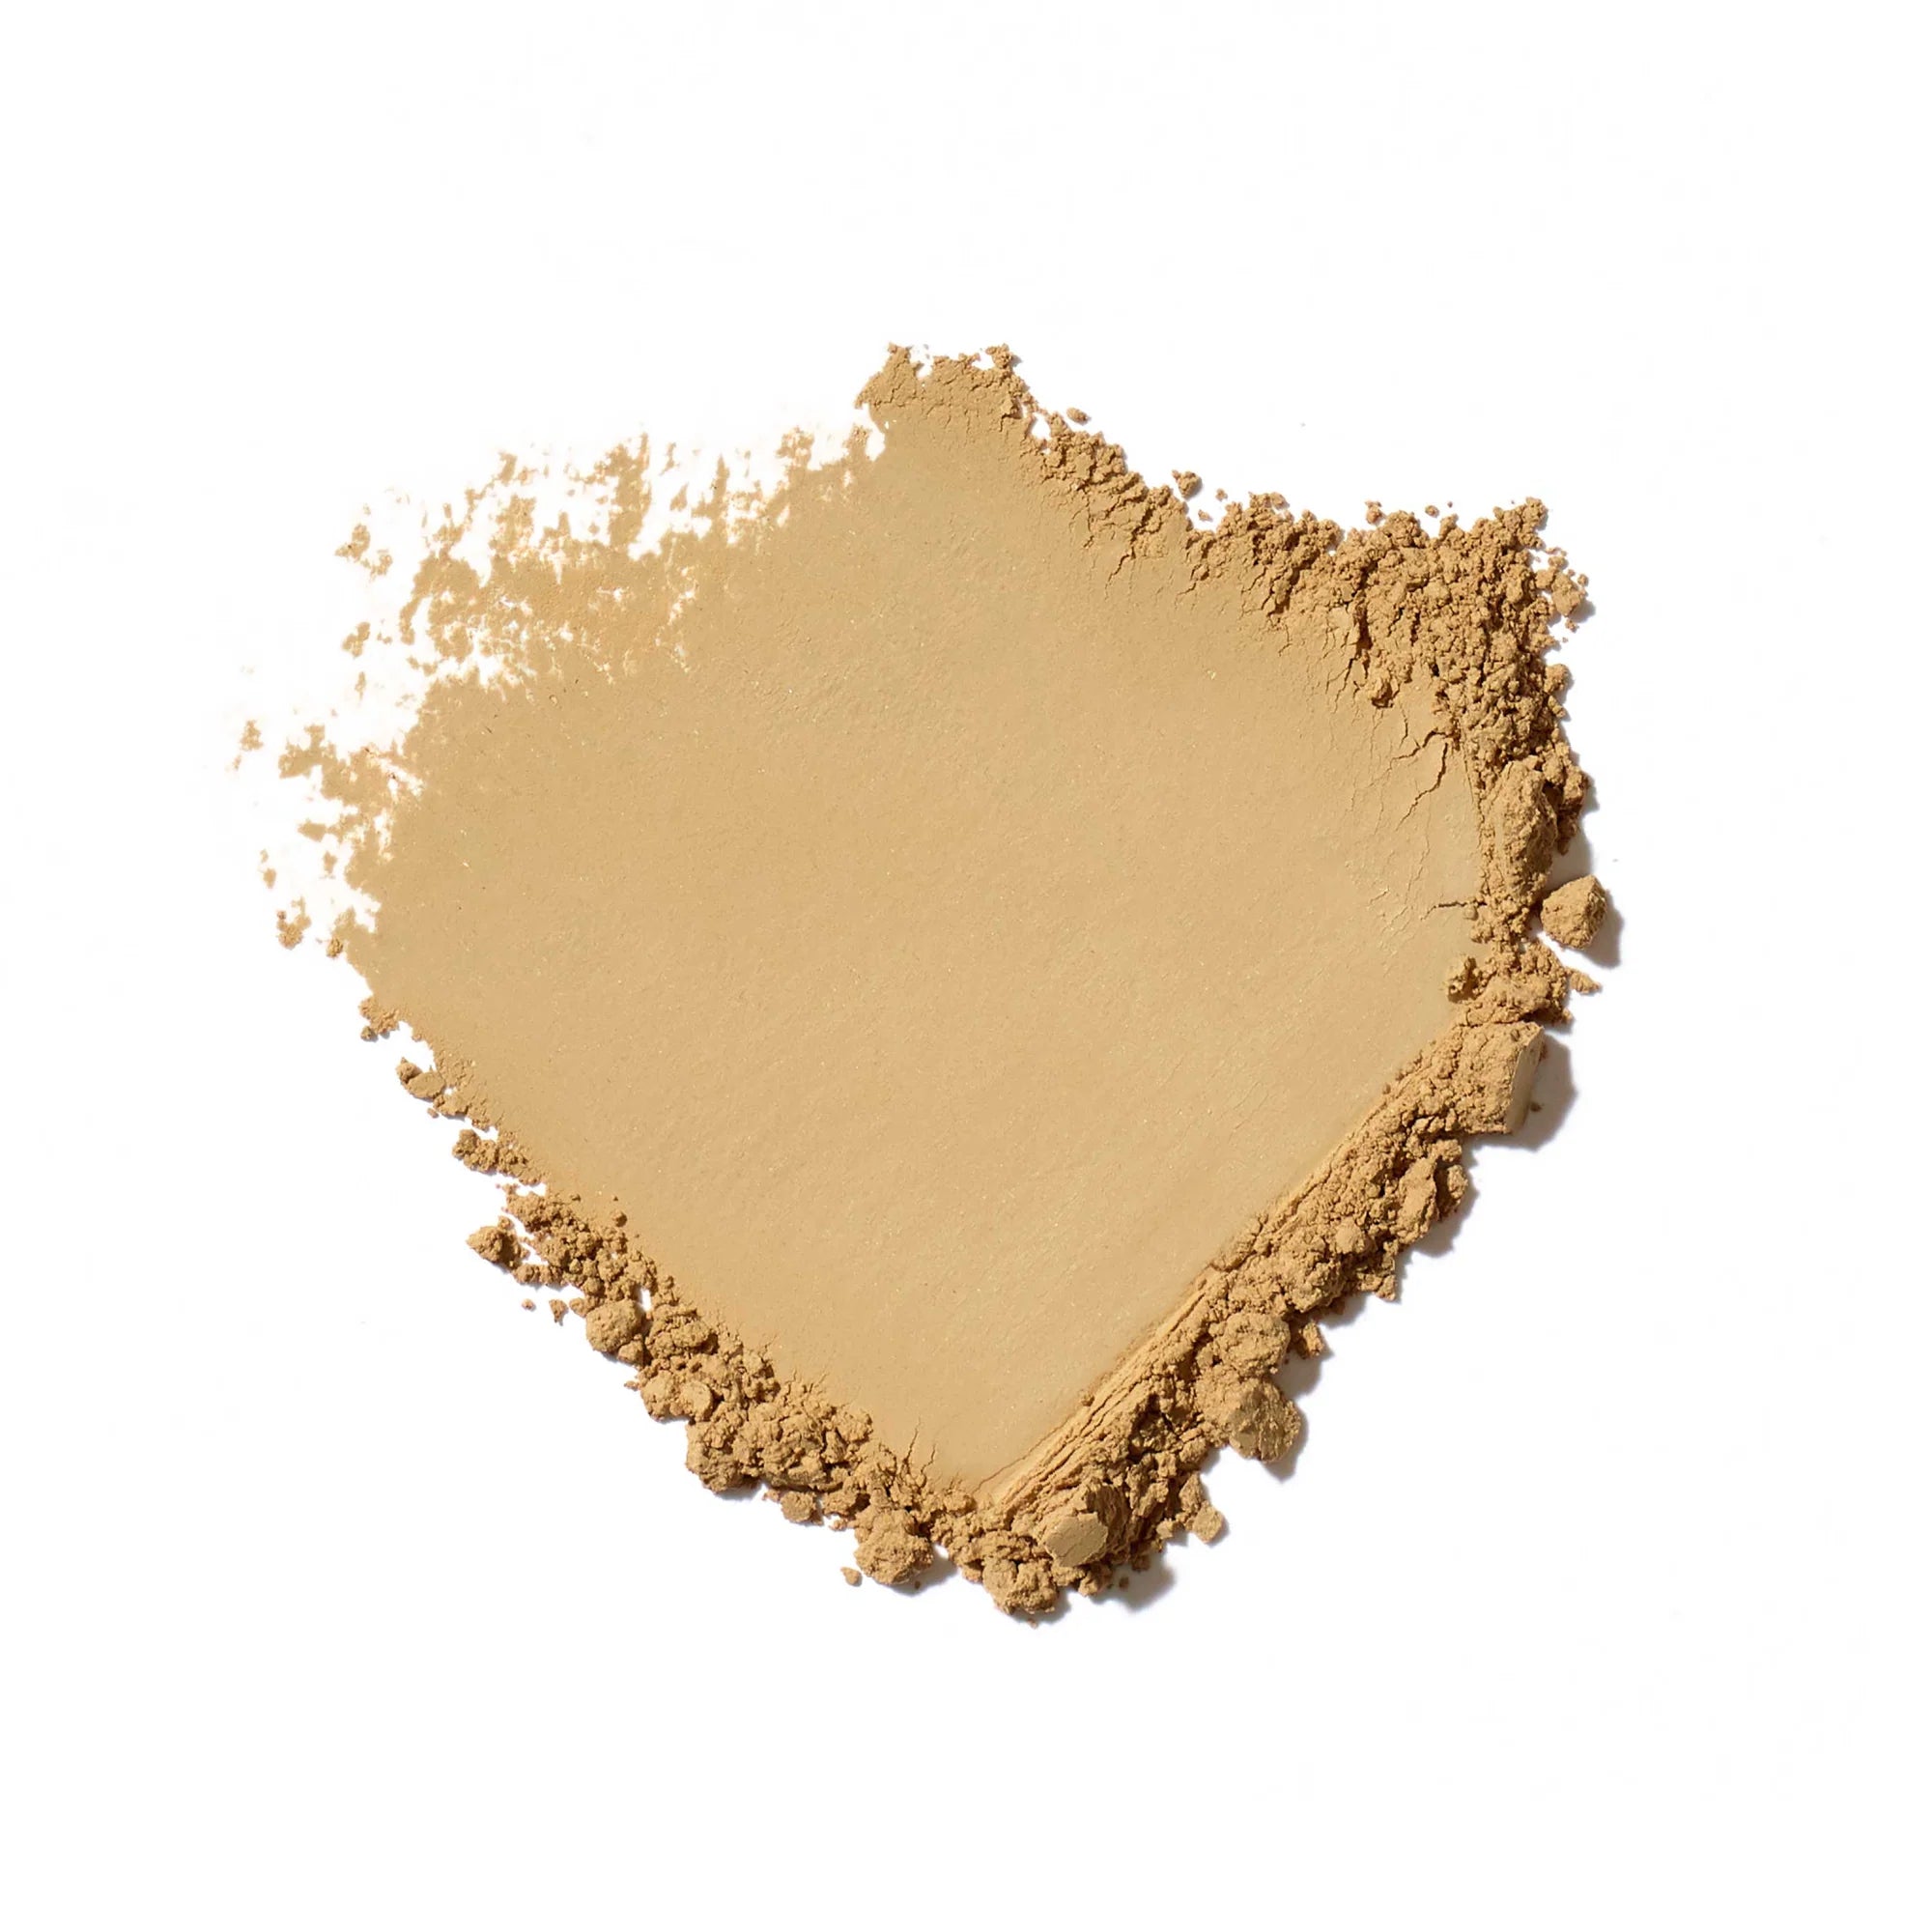 Jane Iredale's Amazing Base® Loose Mineral Powder Refill Brush - shade Latte - Medium/Dark with gold brown undertones